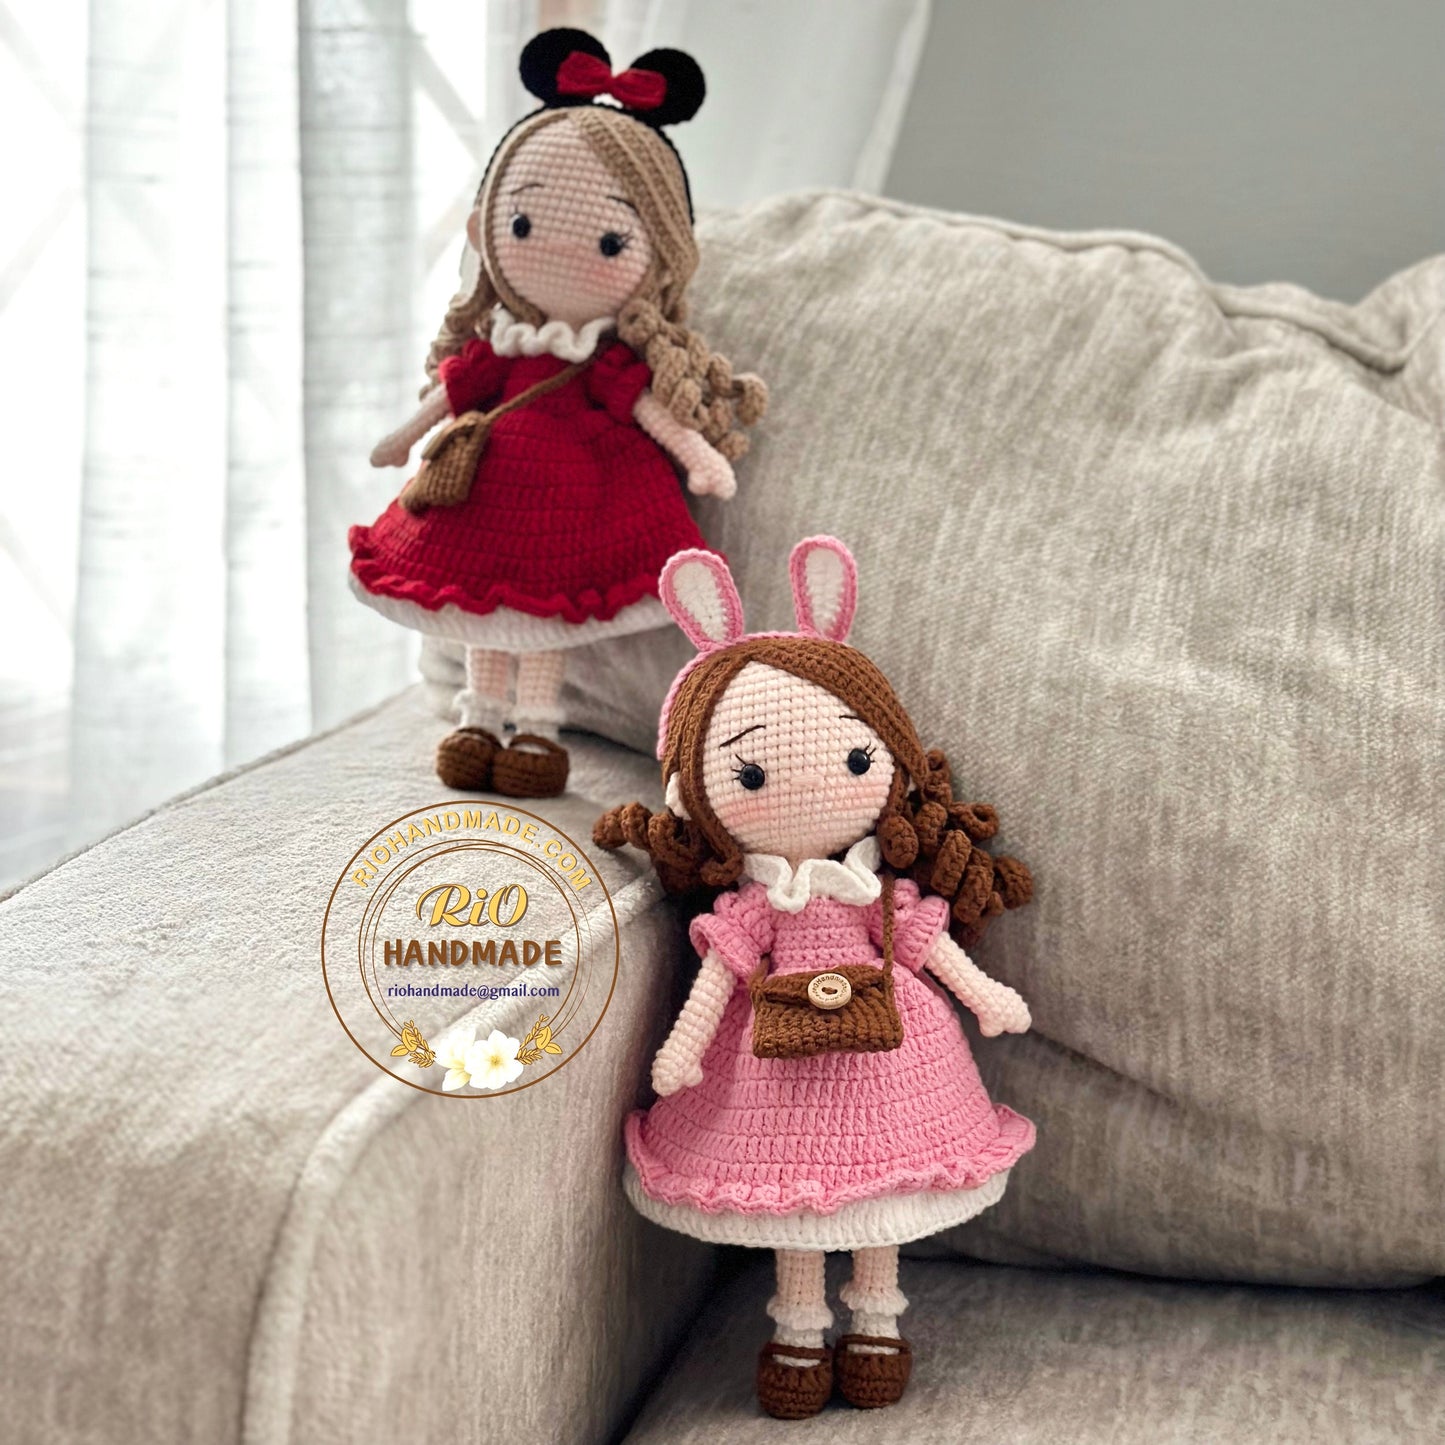 Handmade yarn cotton doll crochet, amigurumi doll, cute gift, soft toy for toddler, kid, adult hobby